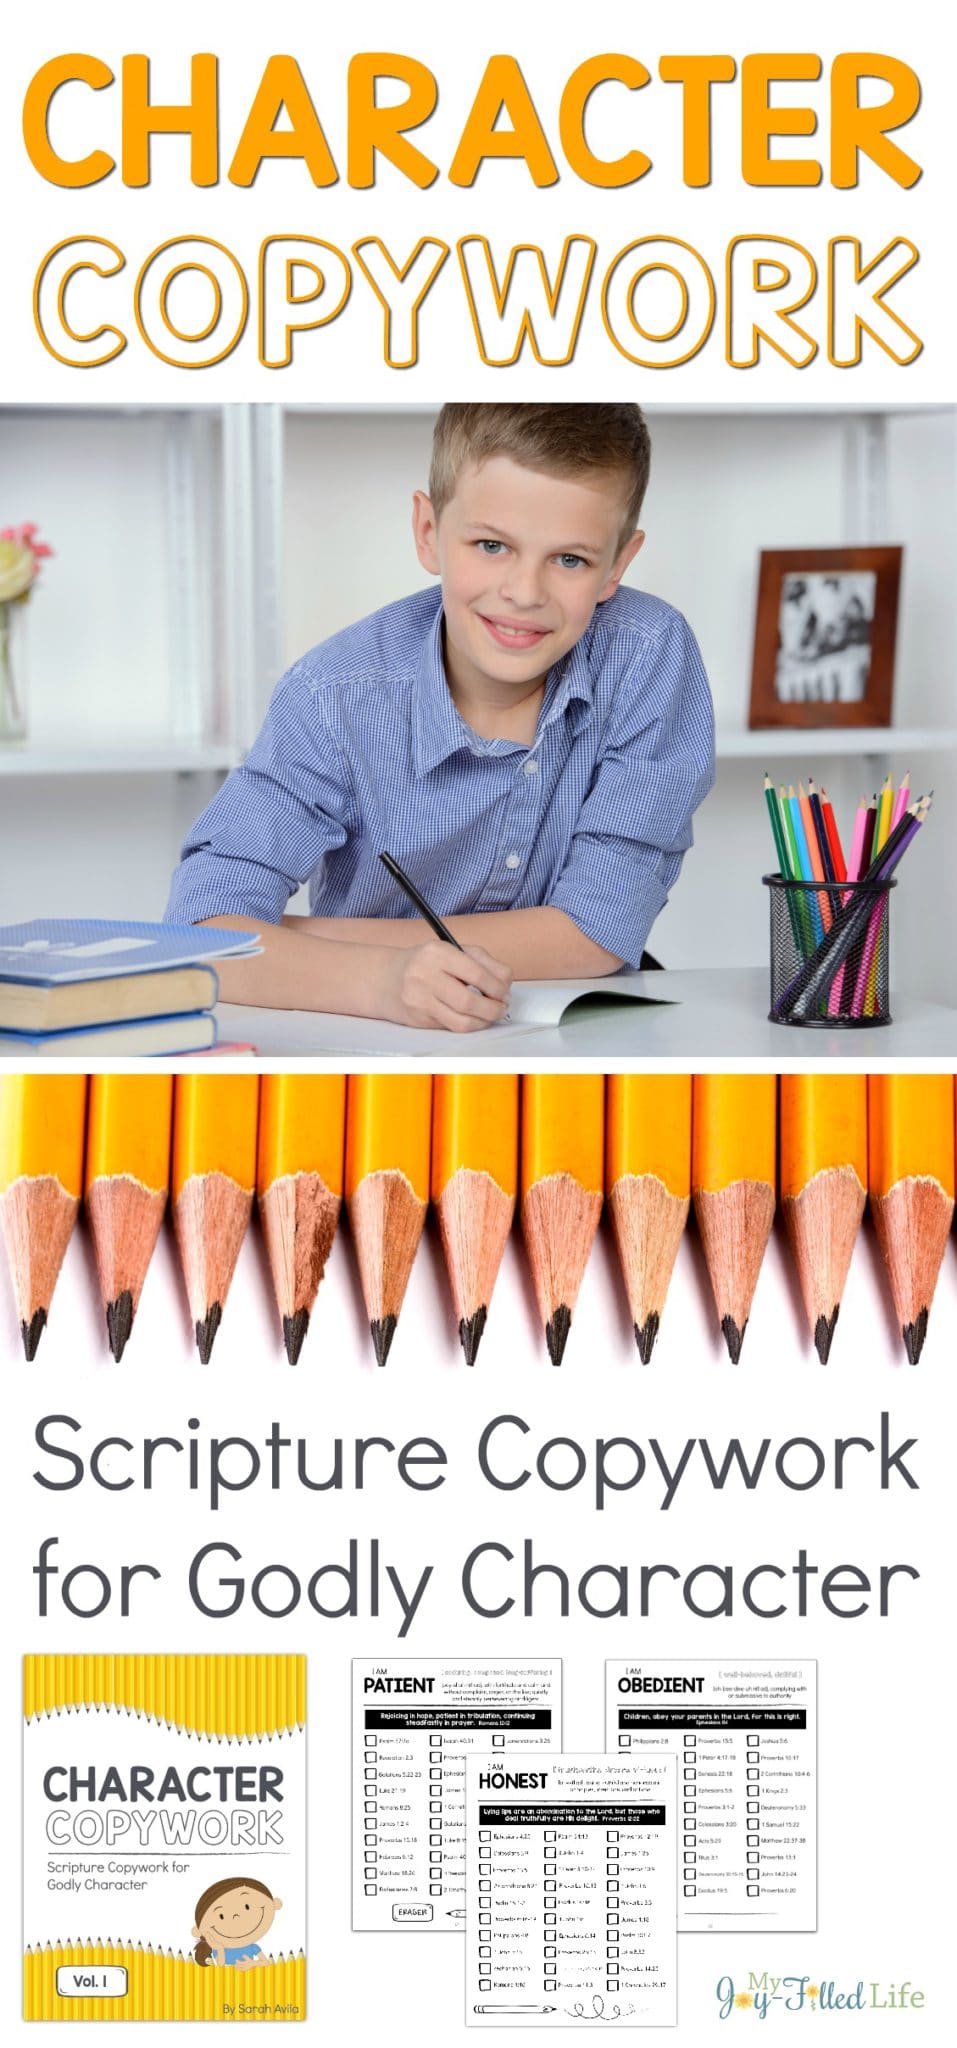 Scripture copywork to help instill Godly character in children. #copywork #scriptures #Christianliving #homeschool